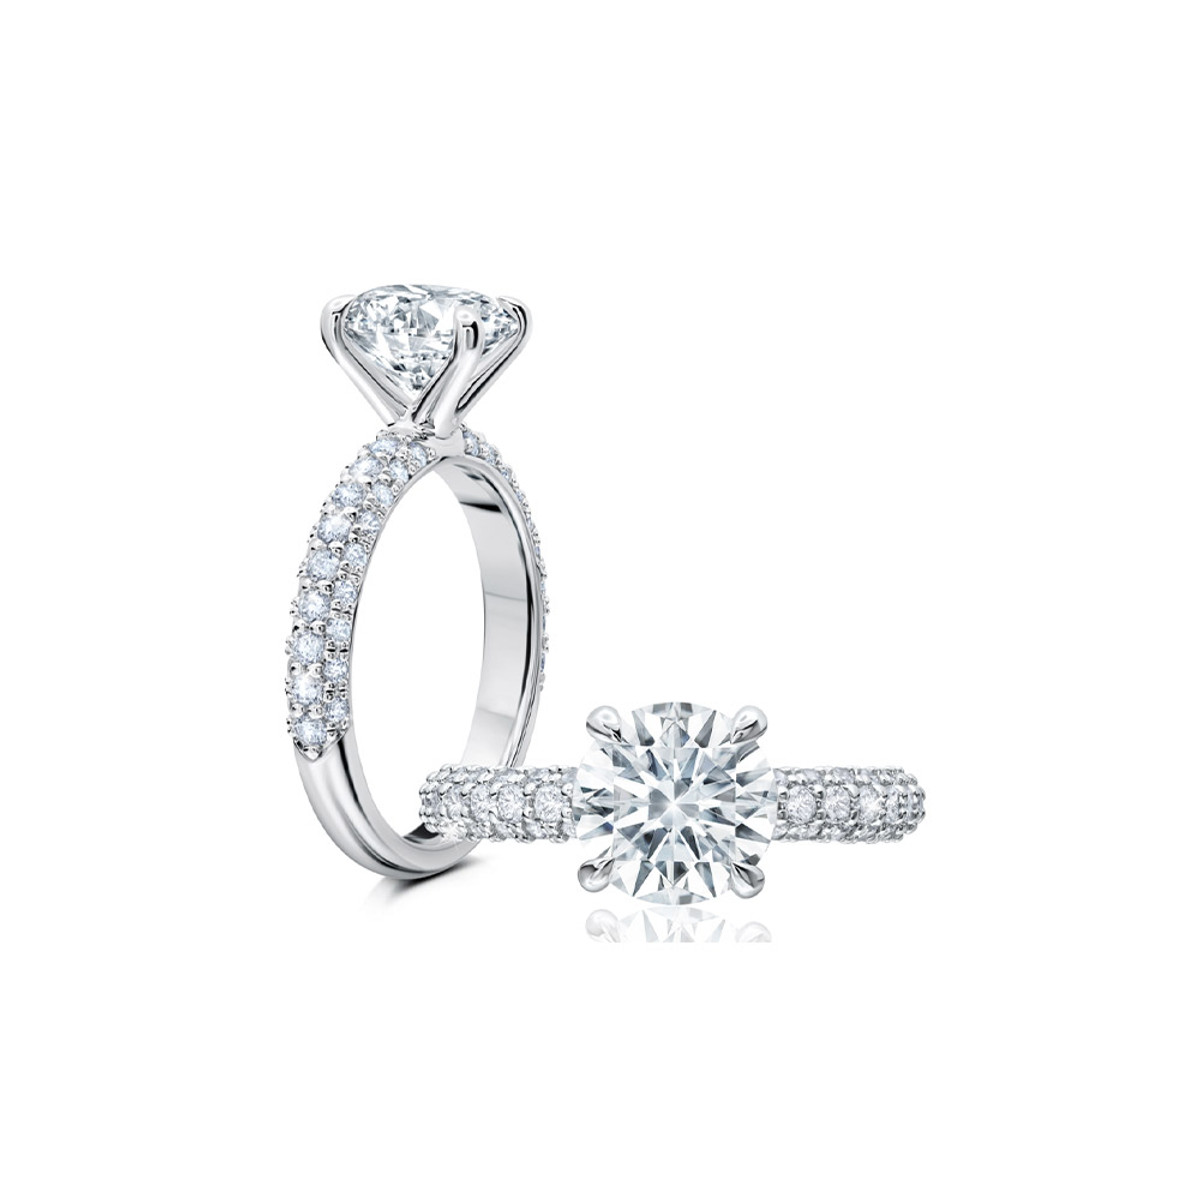 Peter Storm 14K White Gold Diamond Semi-Mount Engagement Ring-39113